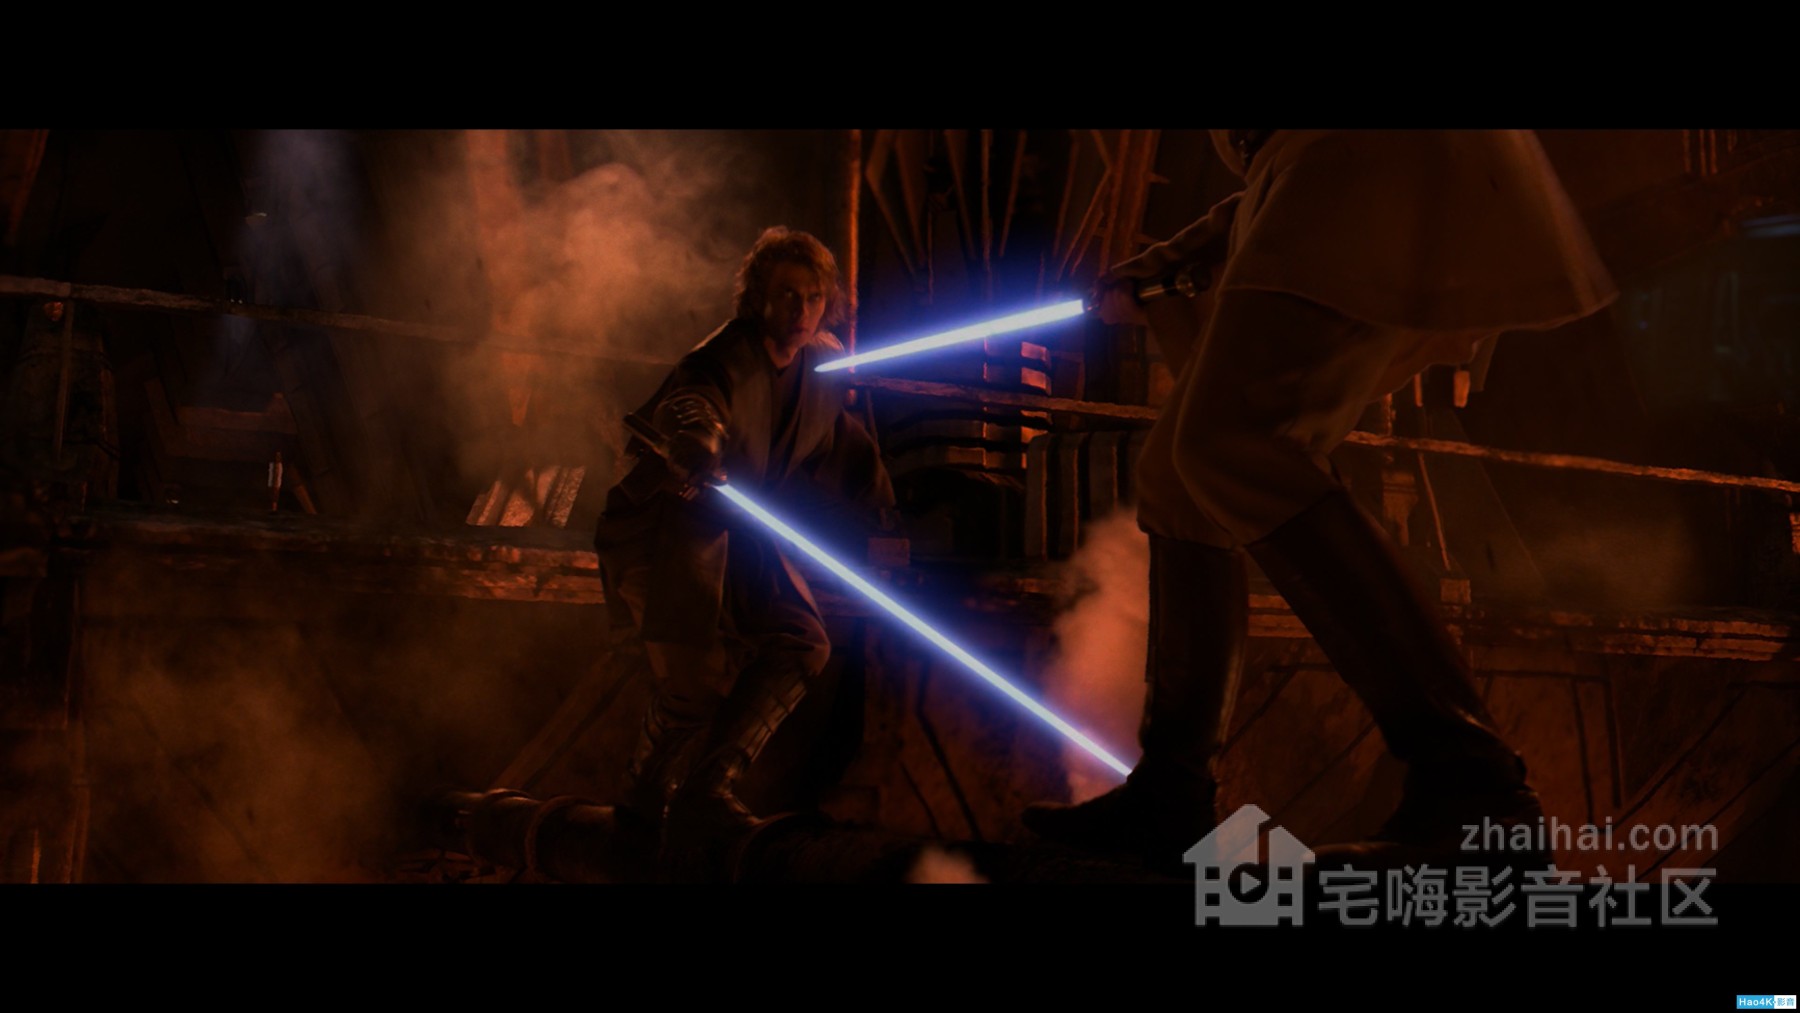 Star.Wars.Episode.III.Revenge.of.the.Sith.2005.2160p.BluRay.REMUX.HEVC.DTS-HD.MA.jpg